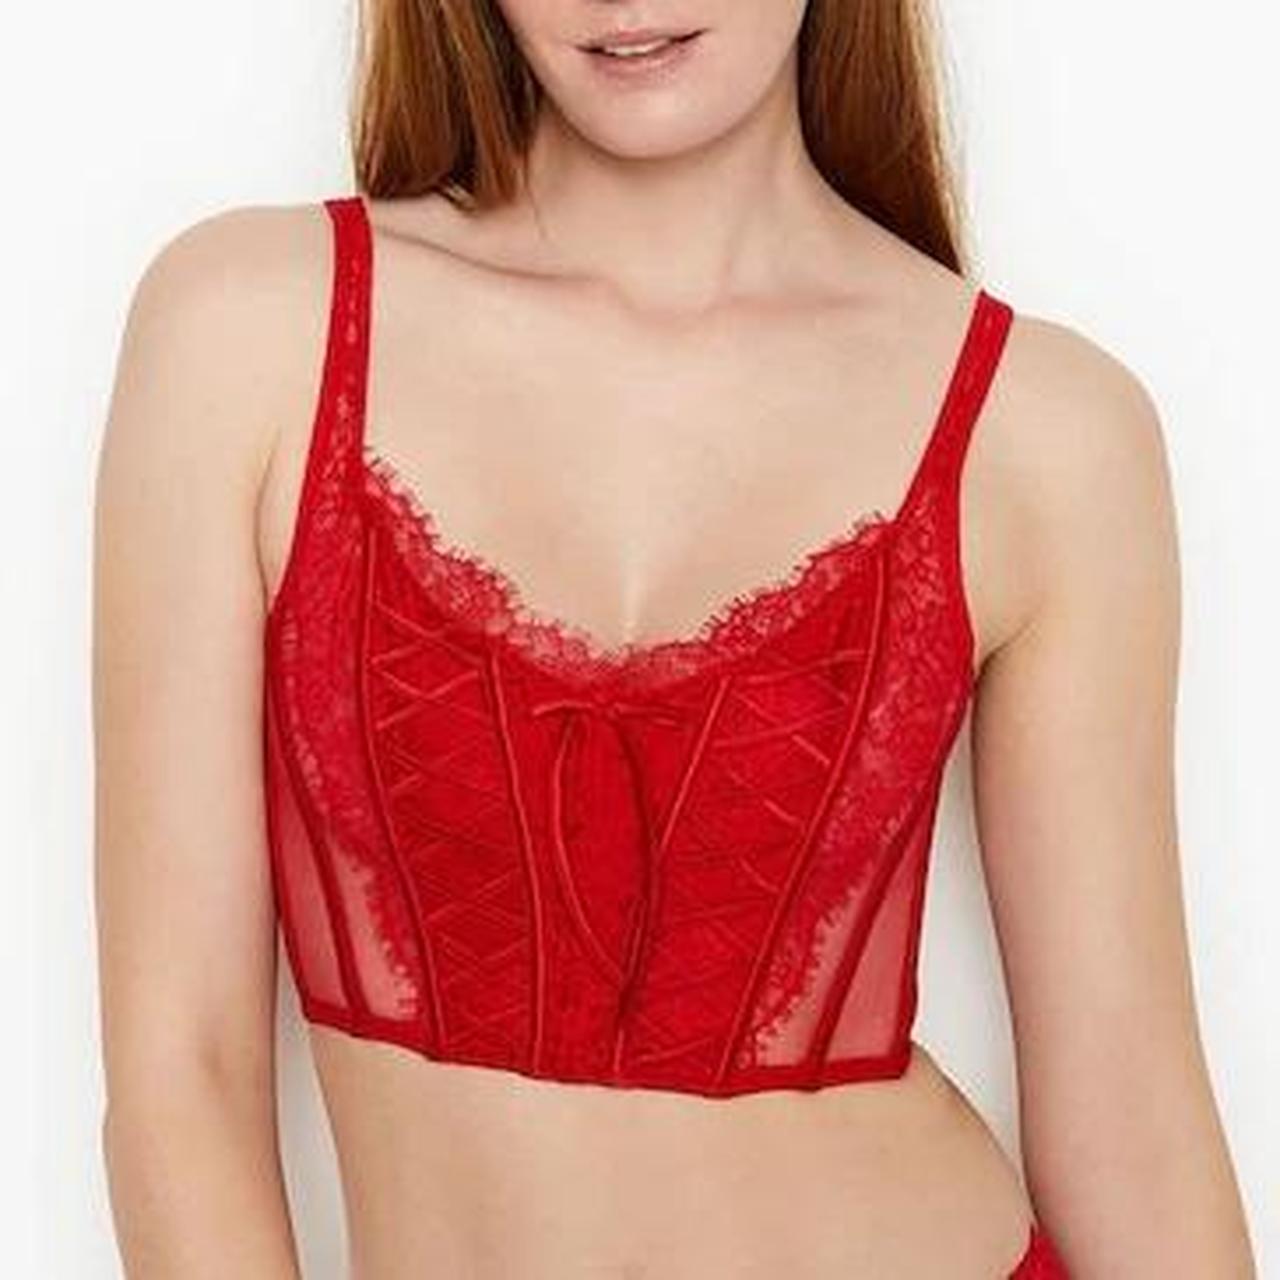 victoria secret red corset never worn size - Depop